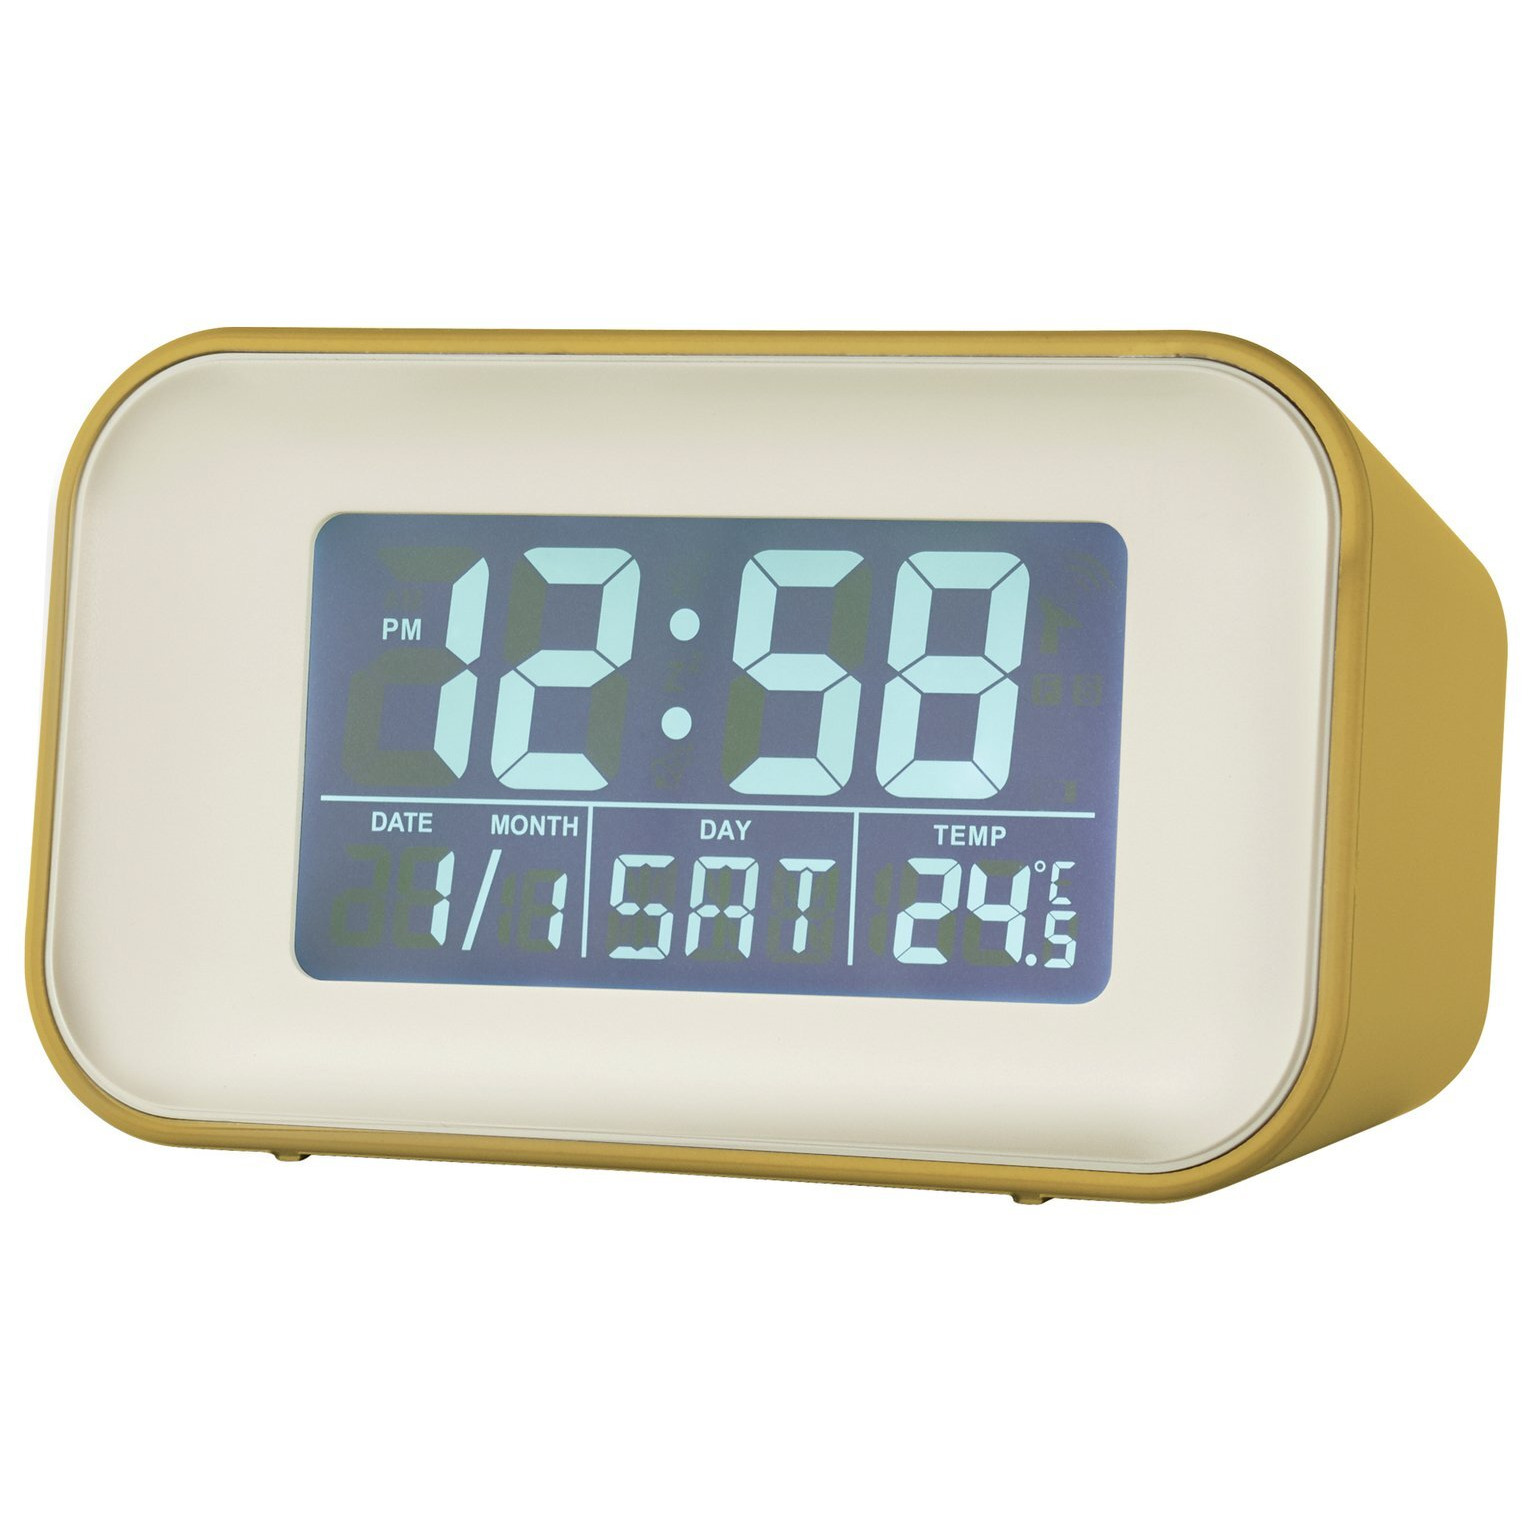 Acctim Alta Digital LCD Alarm Clock - Mustard - image 1